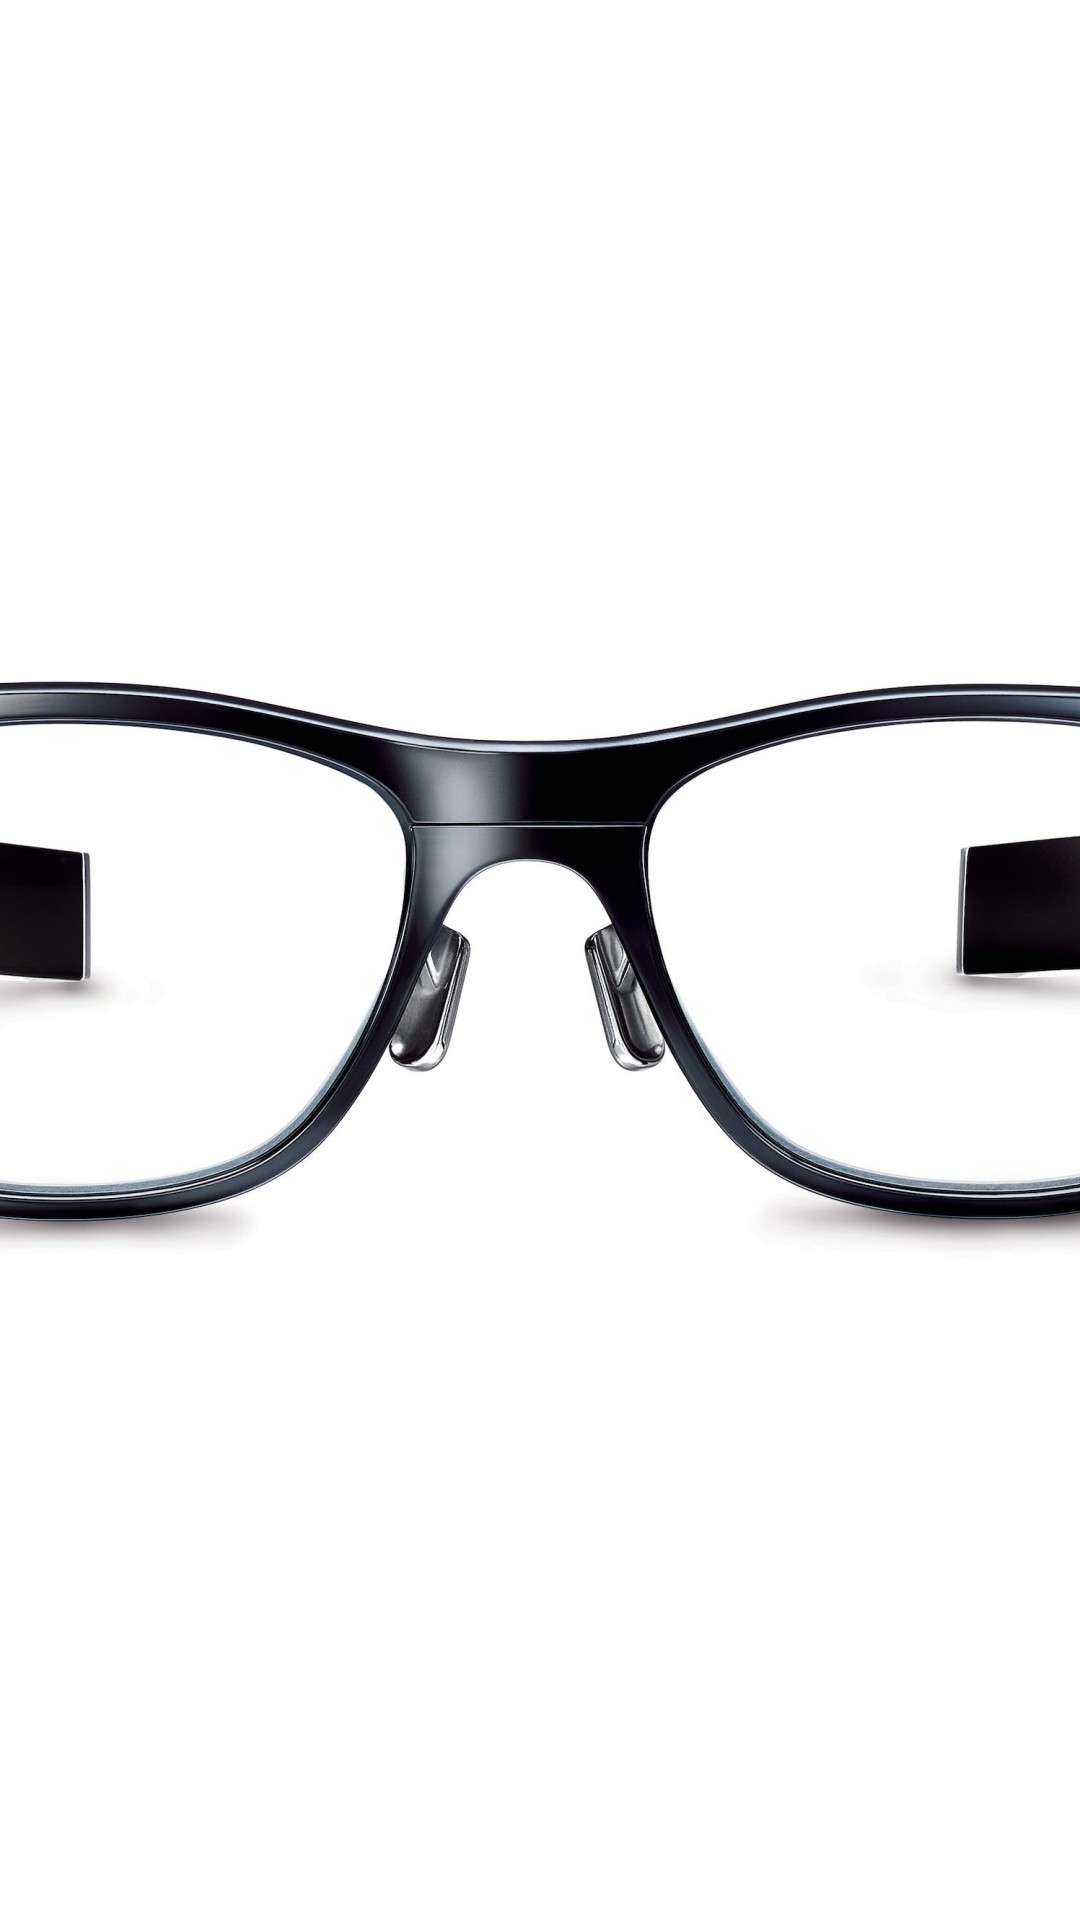 Jins Meme Smart Glasses Wallpaper for Google Nexus 5